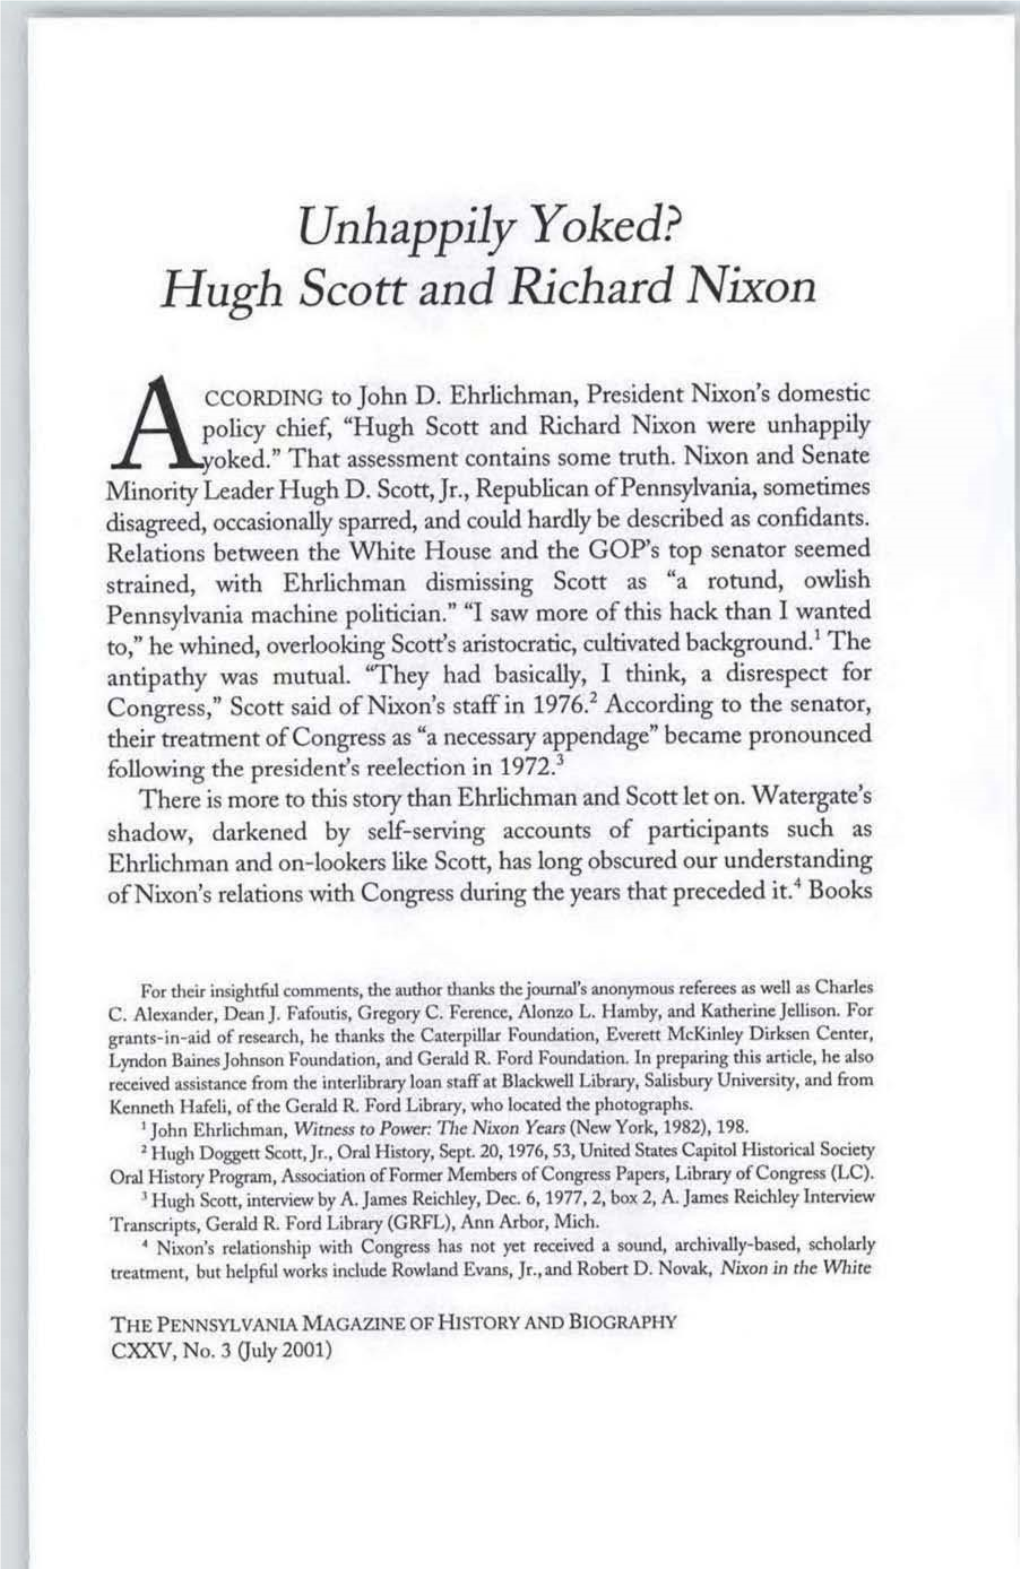 Hugh Scott and Richard Nixon Scordingto John D